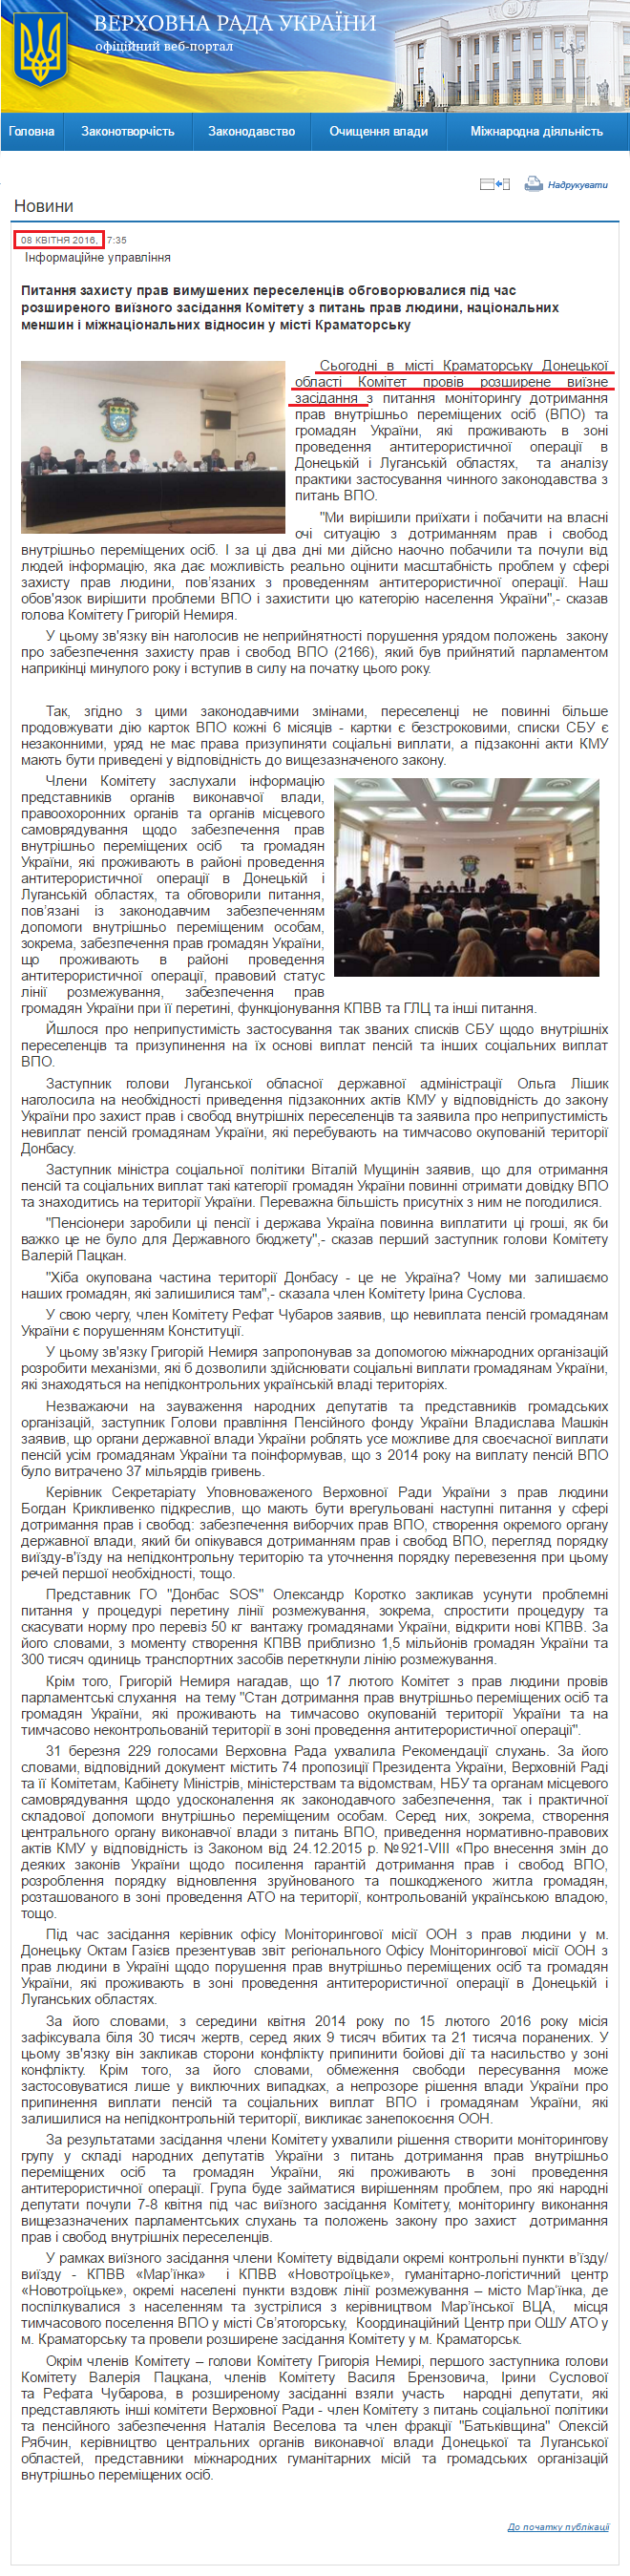 http://rada.gov.ua/news/Novyny/127796.html